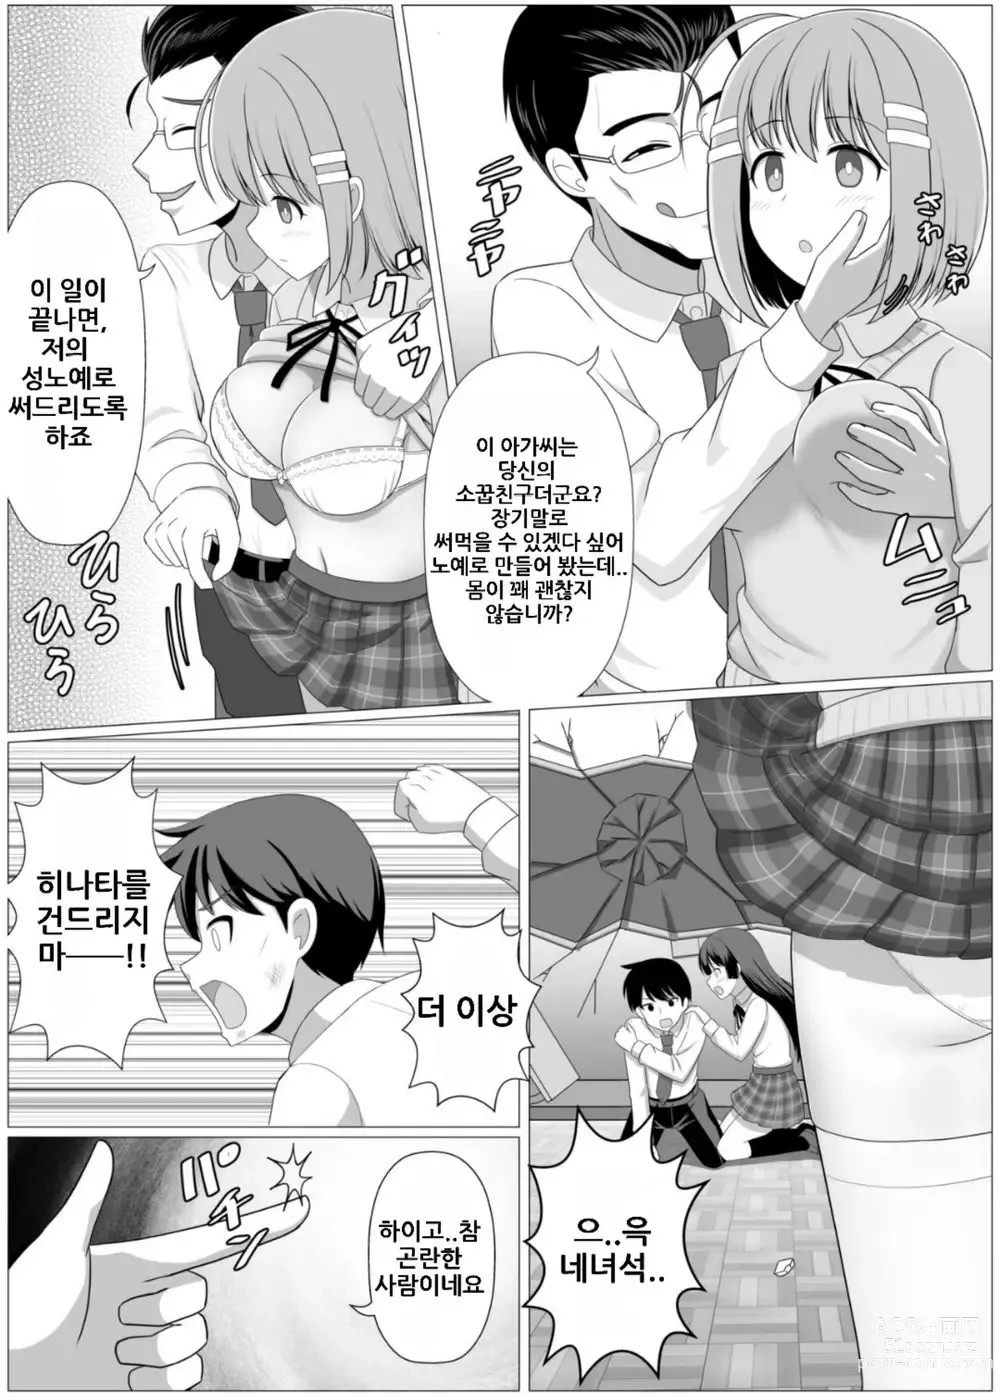 Page 3 of doujinshi 이능력 배틀 만화에서 소꿉친구가 적에게 조종당하는 이야기